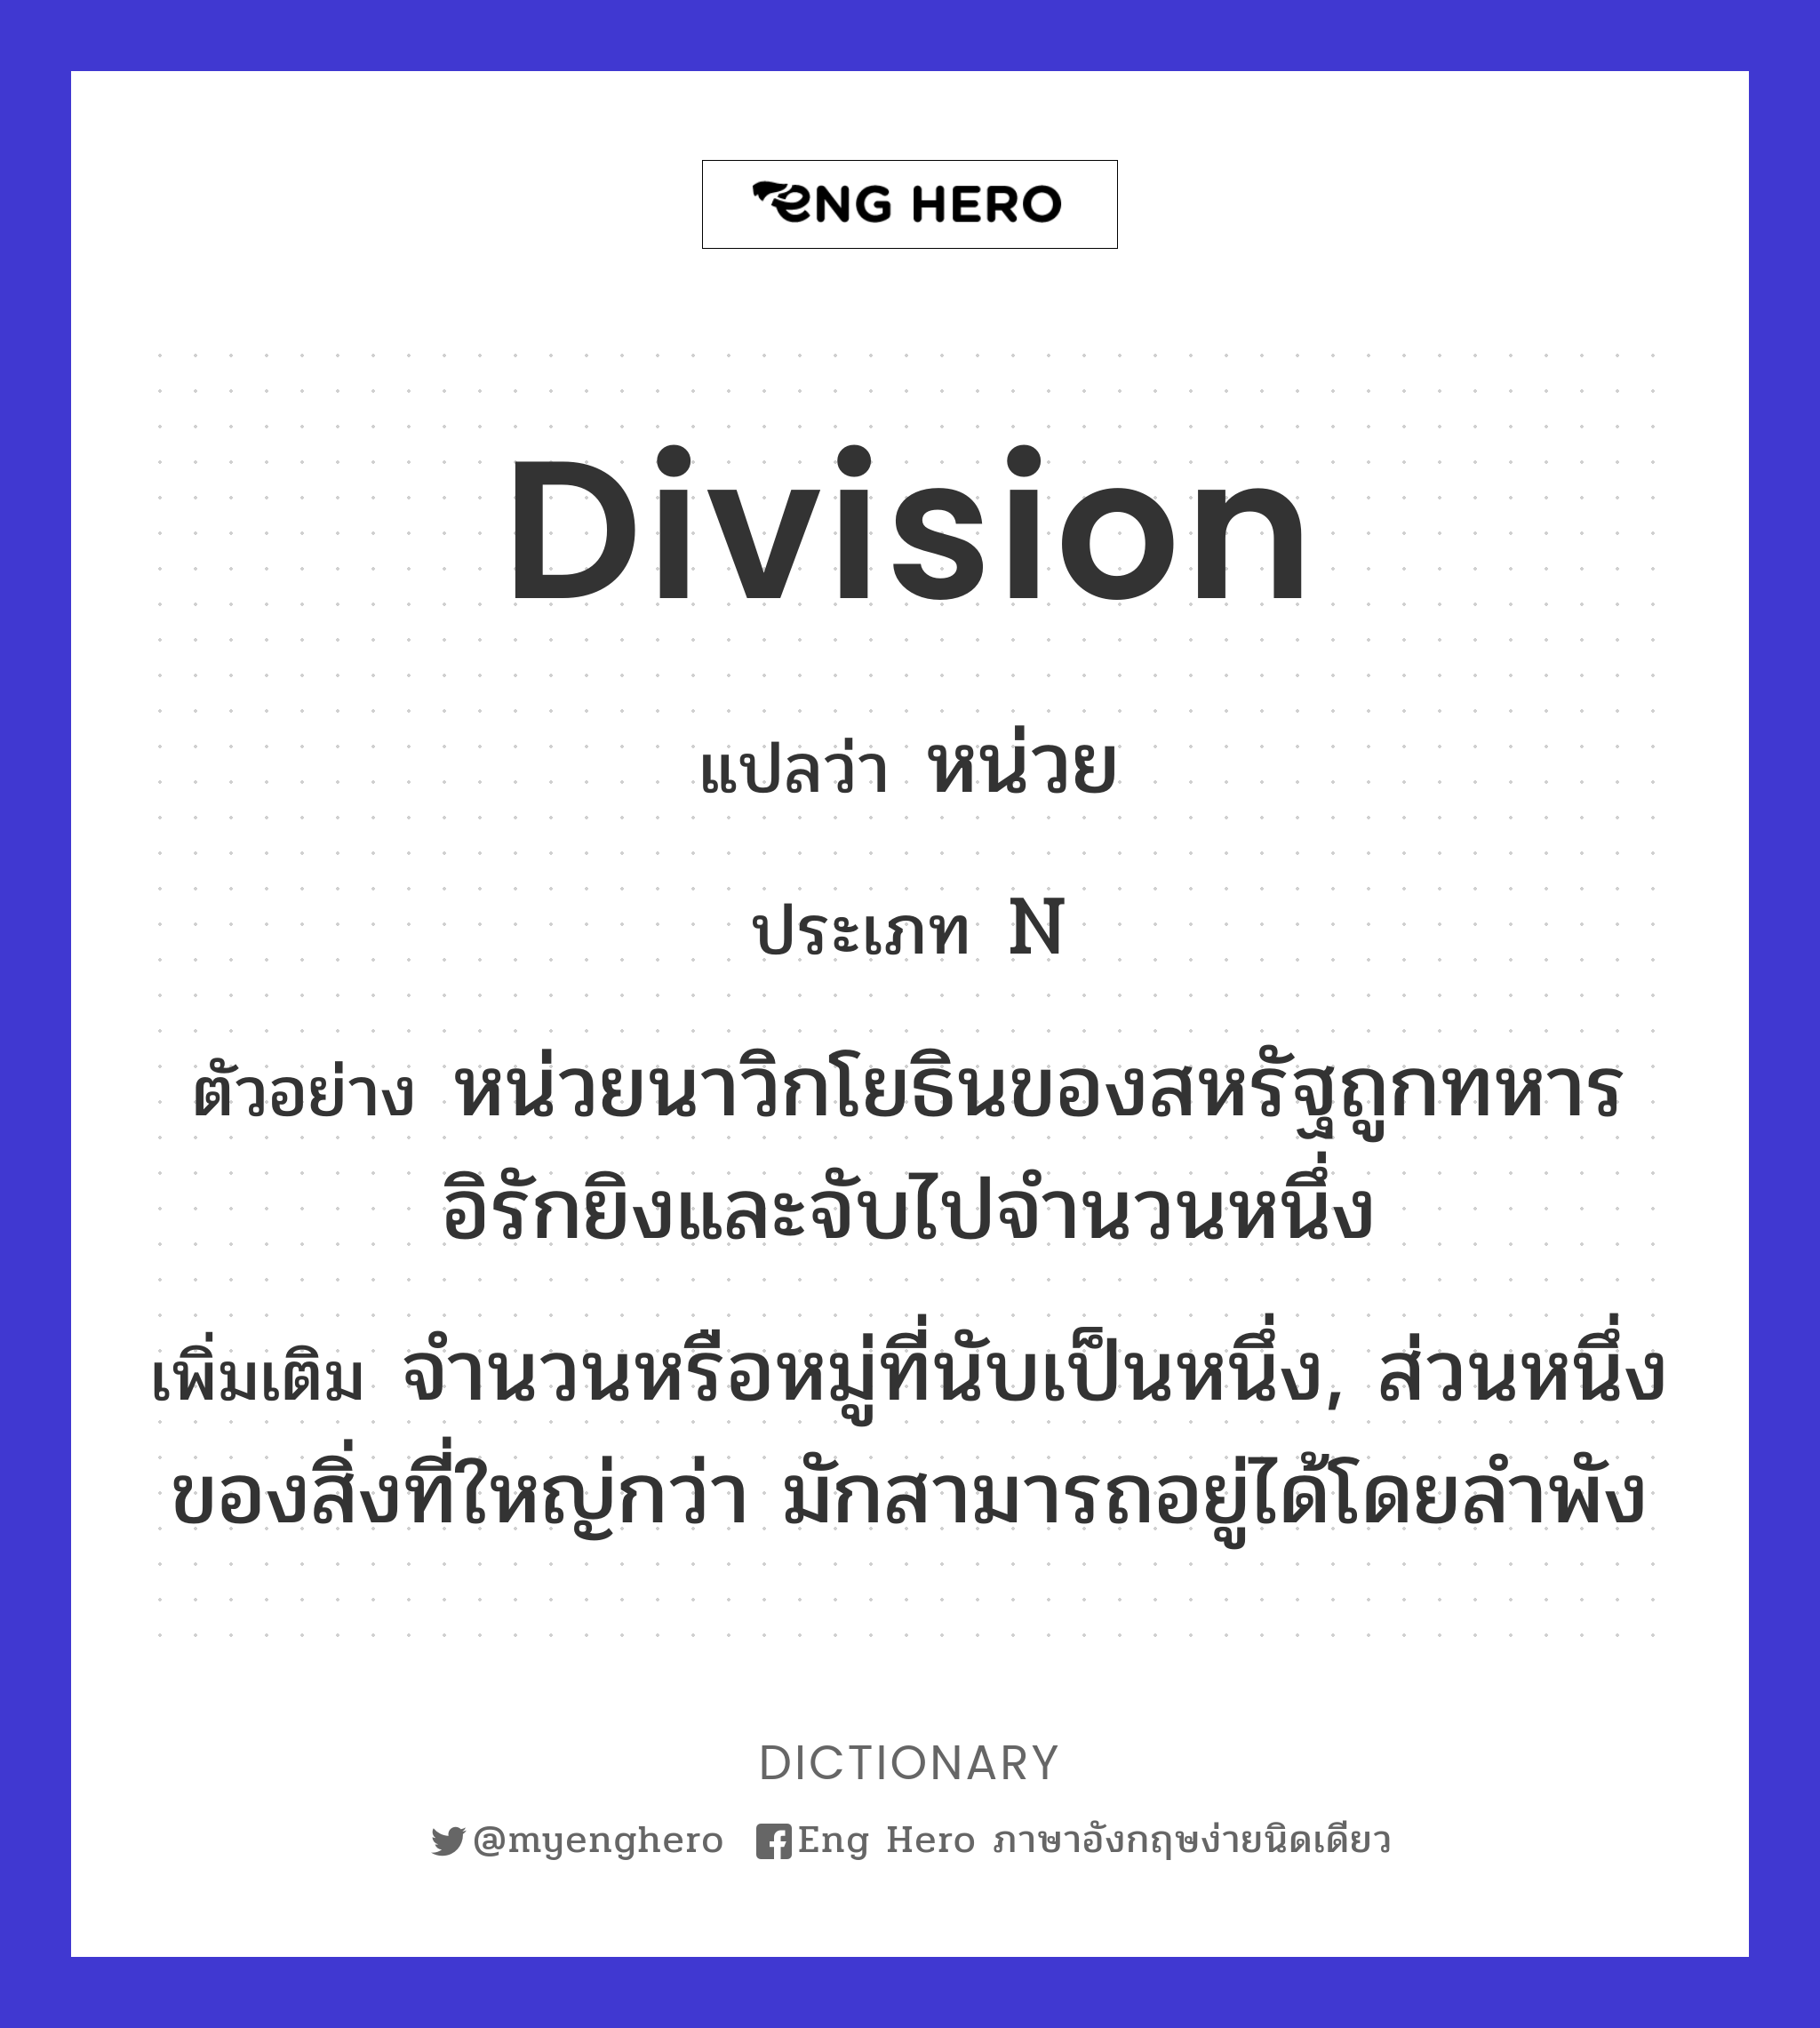 division